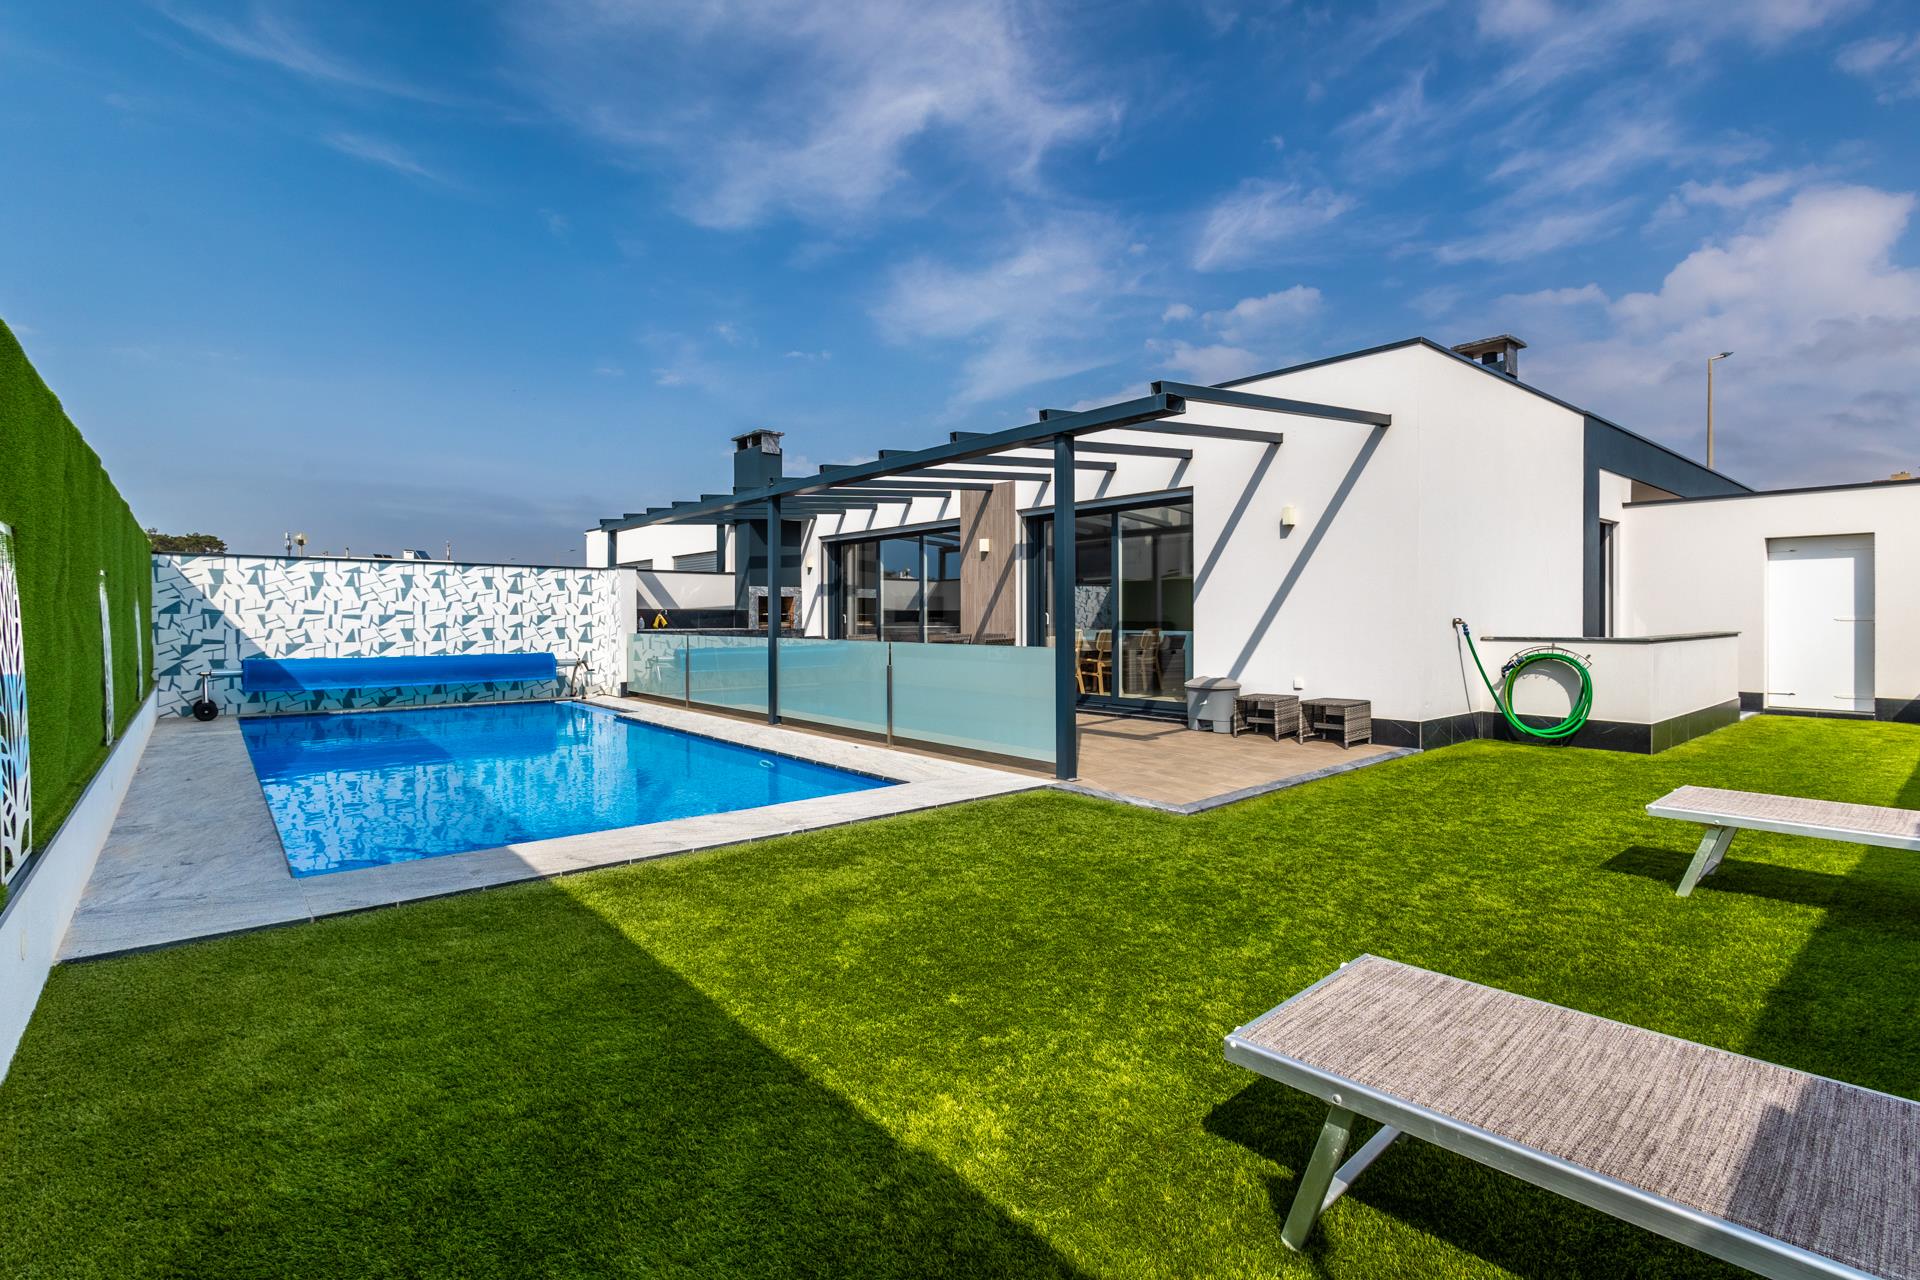 3+1 bedroom single storey villa with swimming pool - Praia Pedra do Ouro